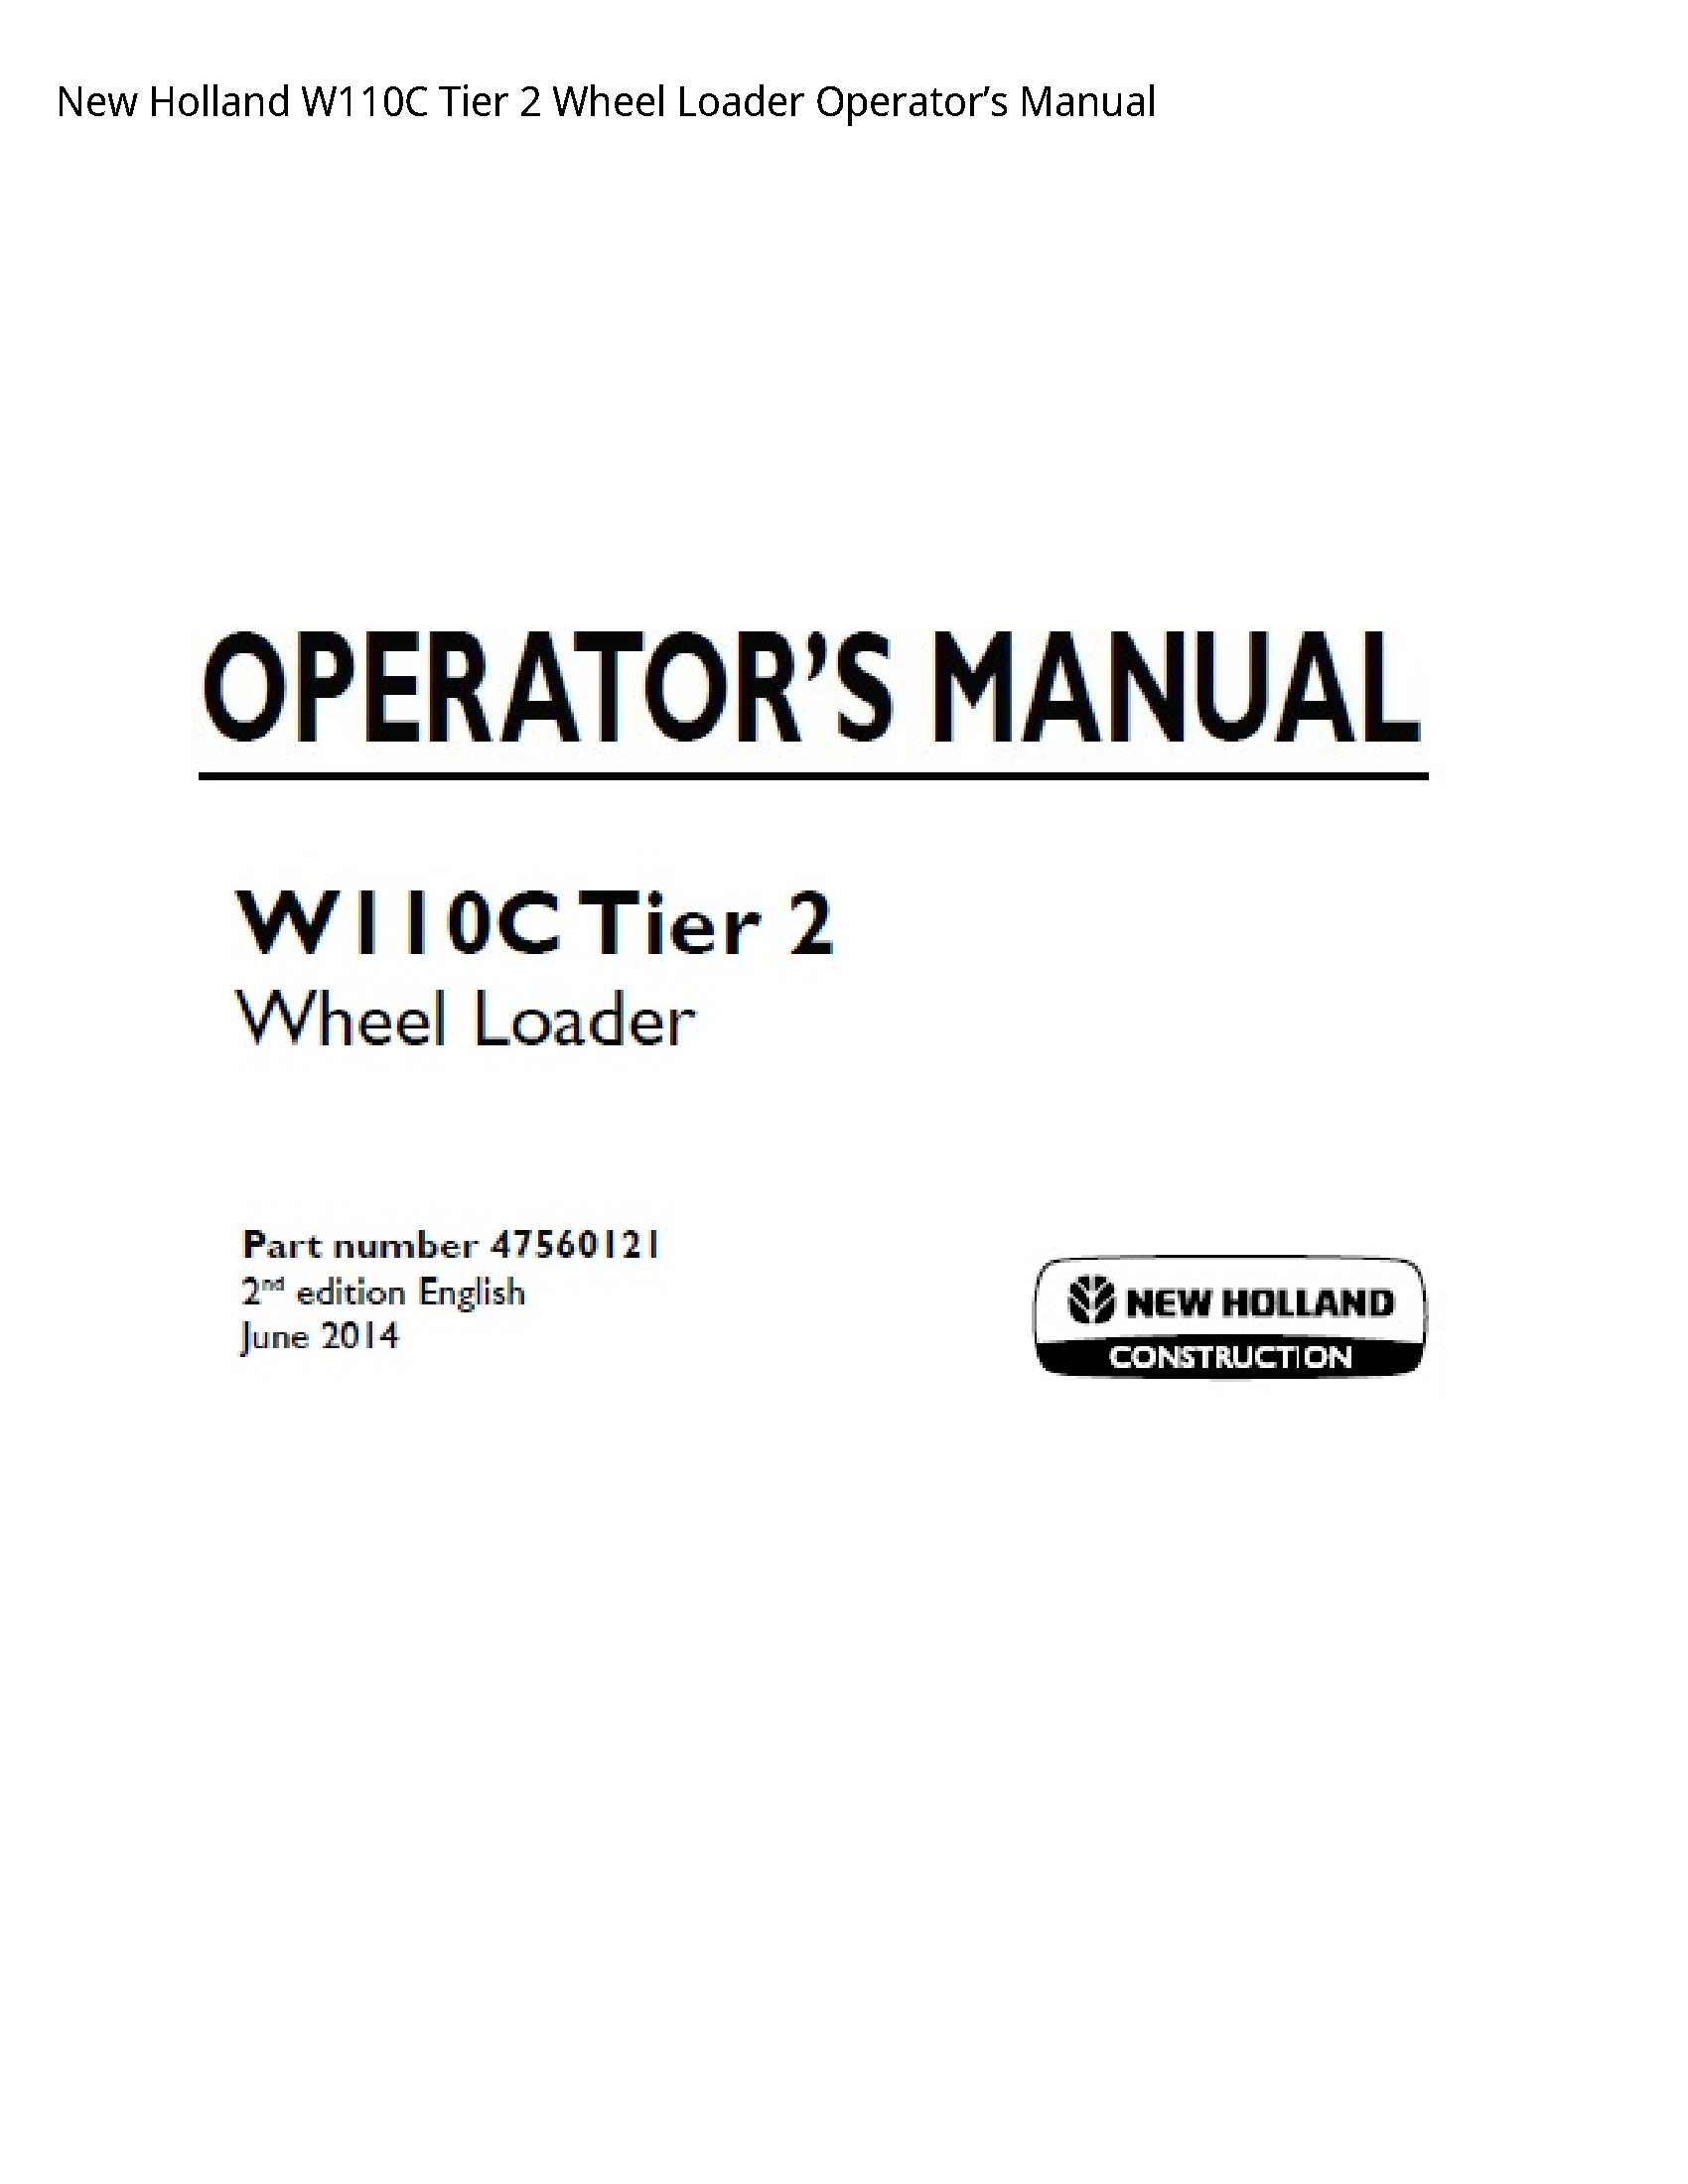 New Holland W110C Tier Wheel Loader Operator’s manual